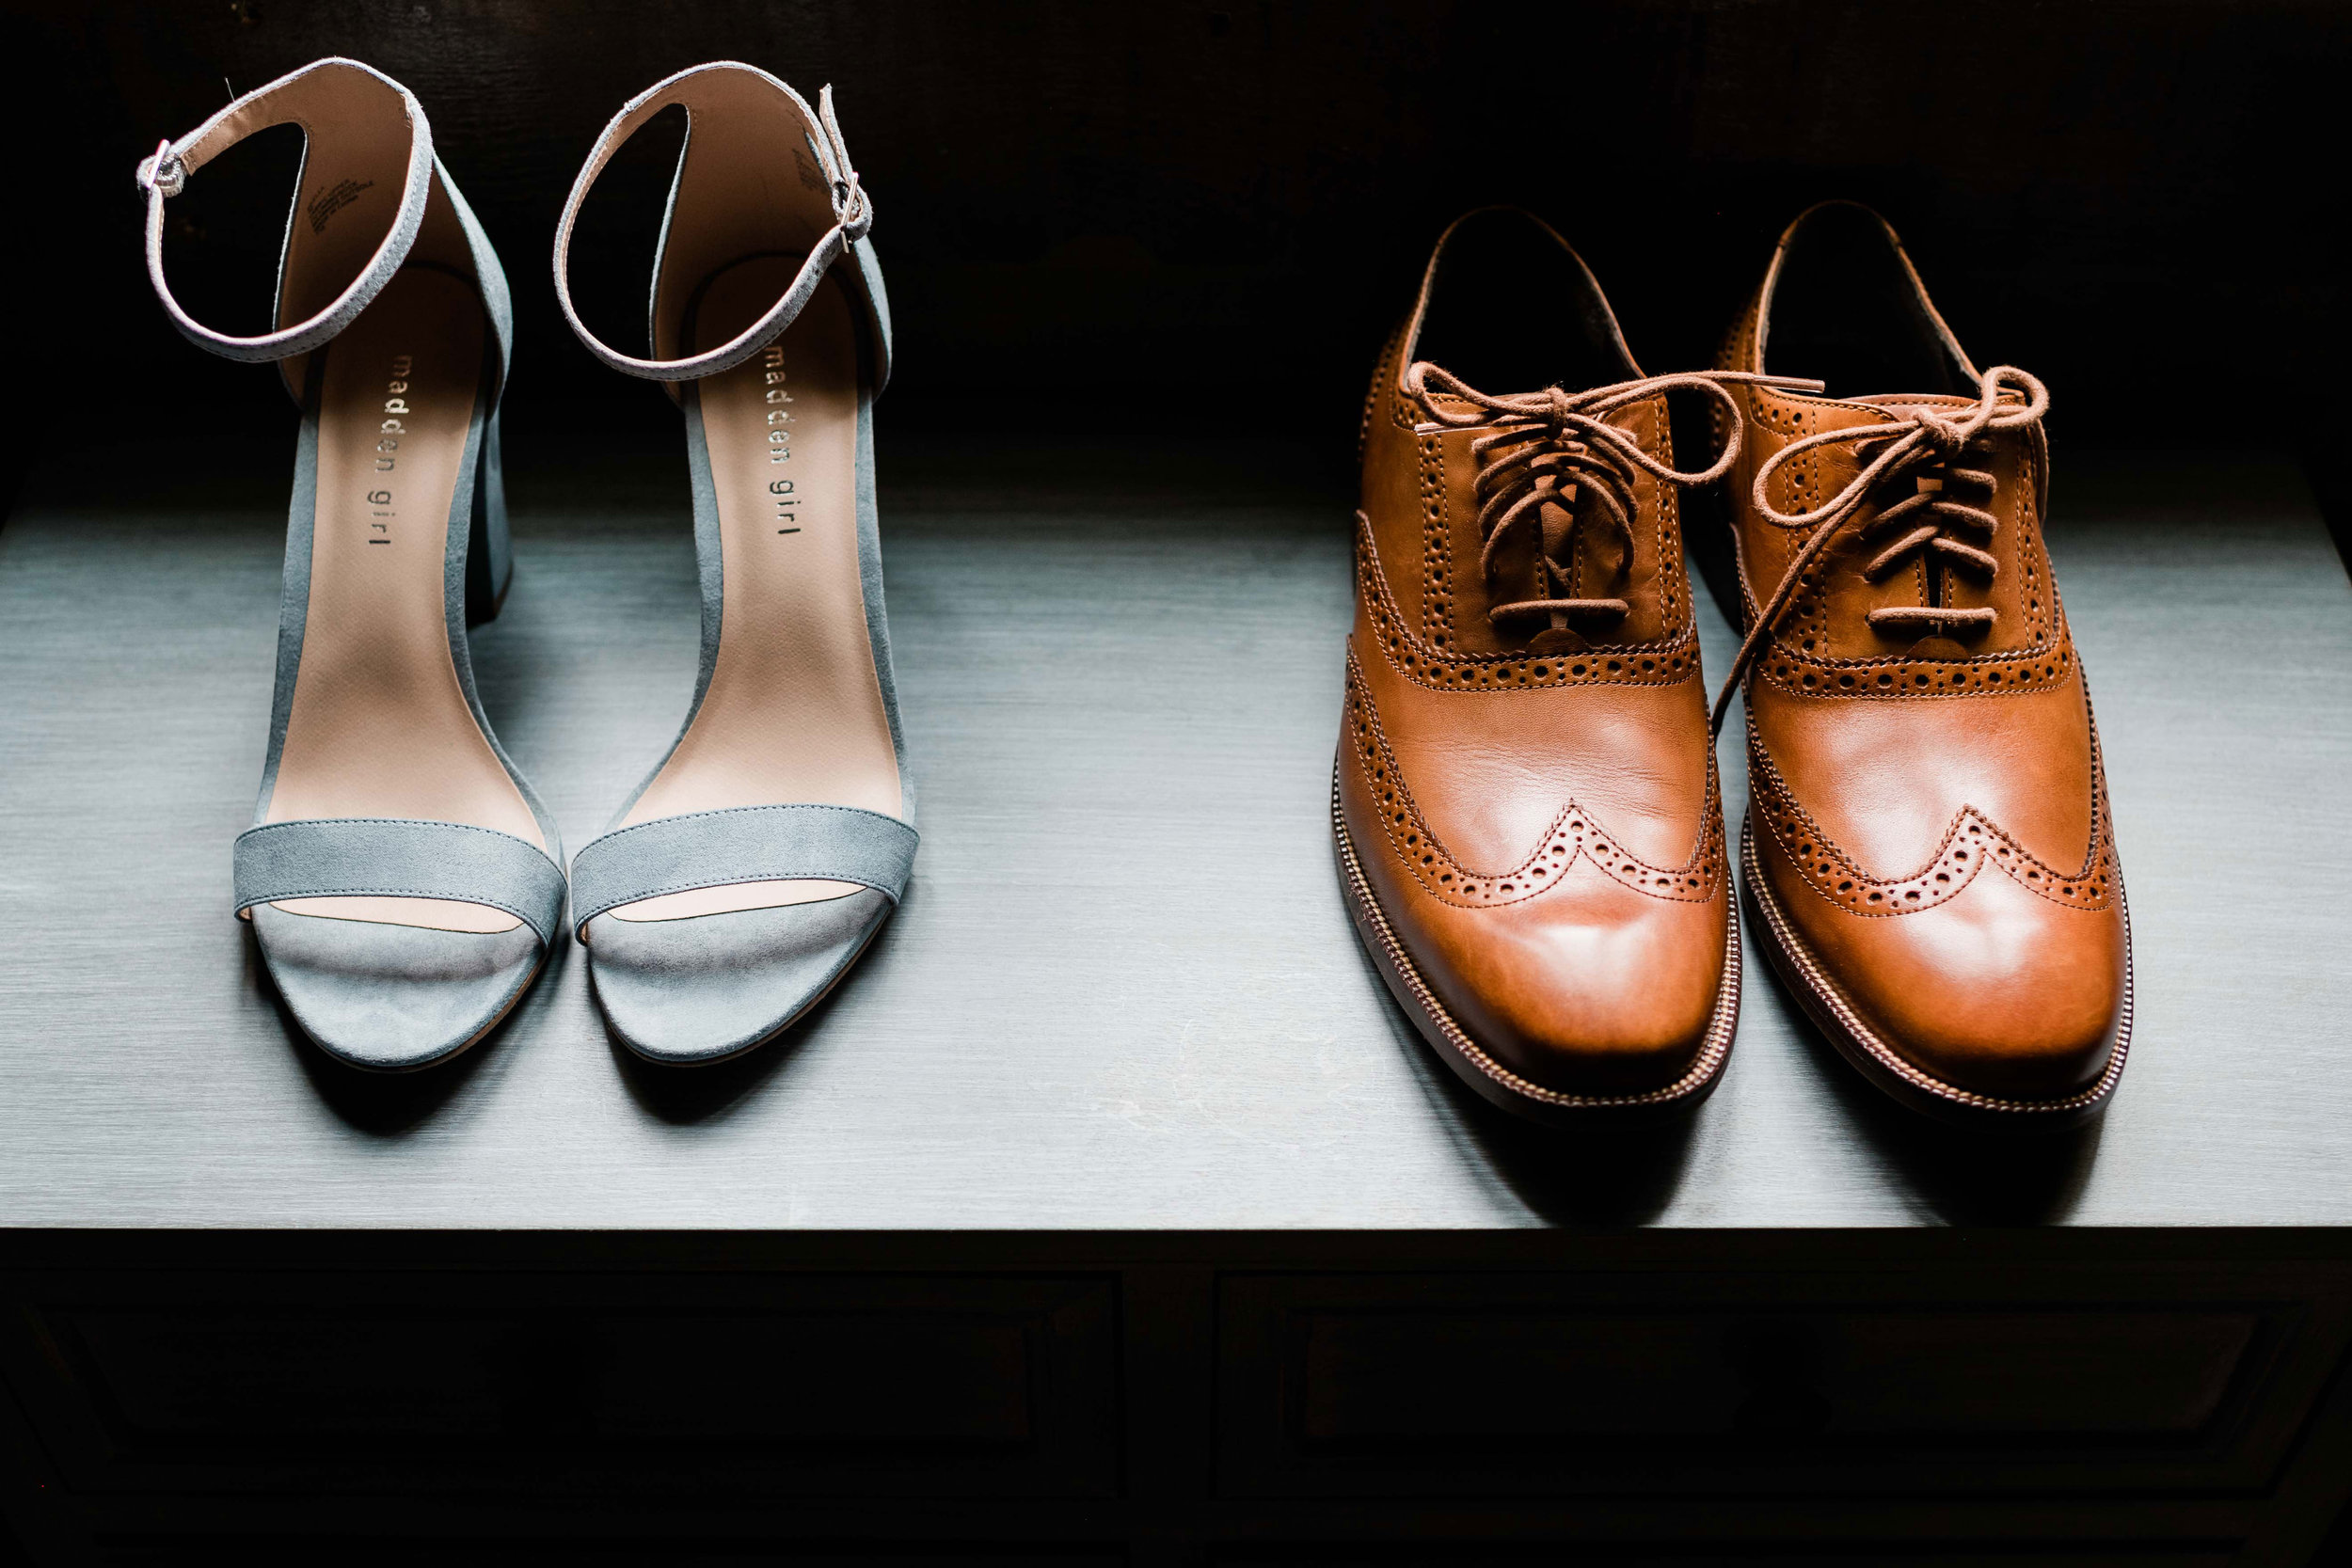 Bride and groom shoes on dresser